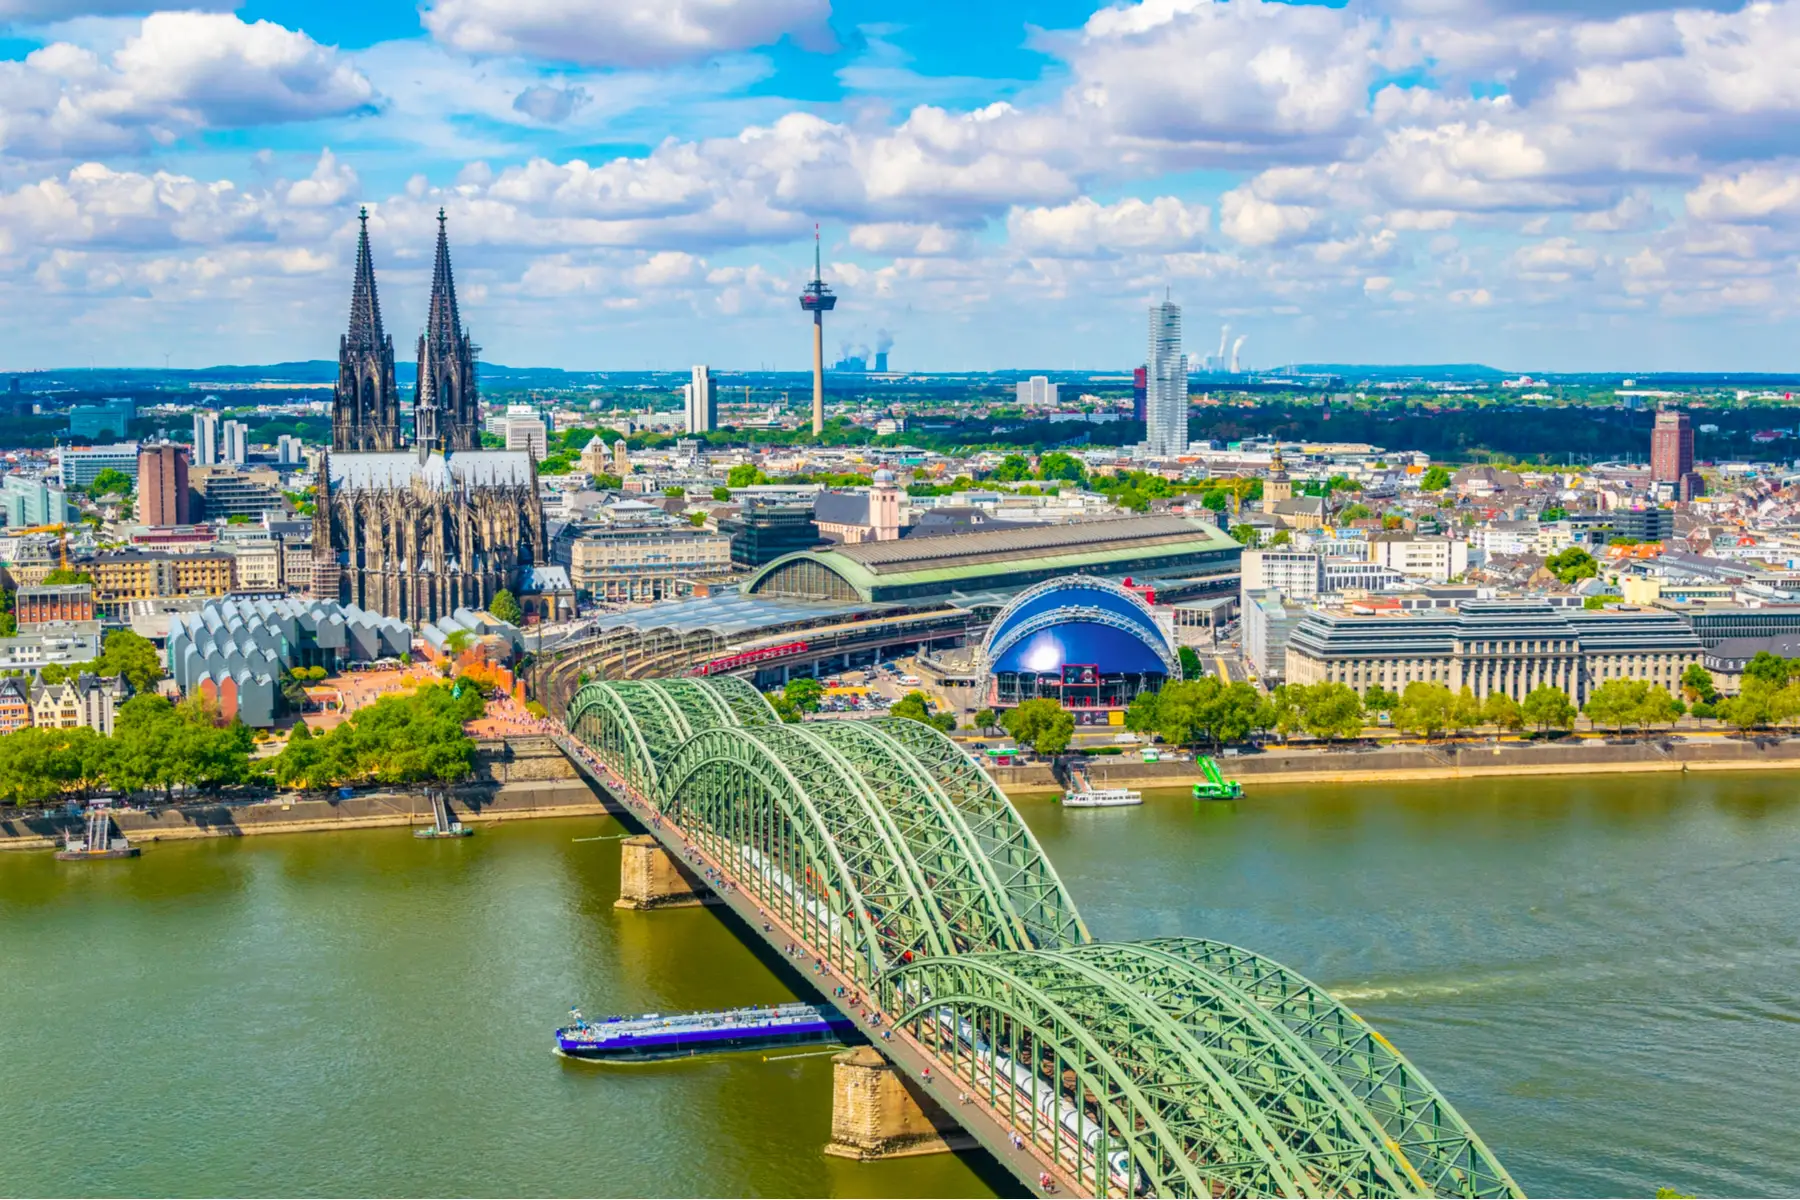 Cologne city center